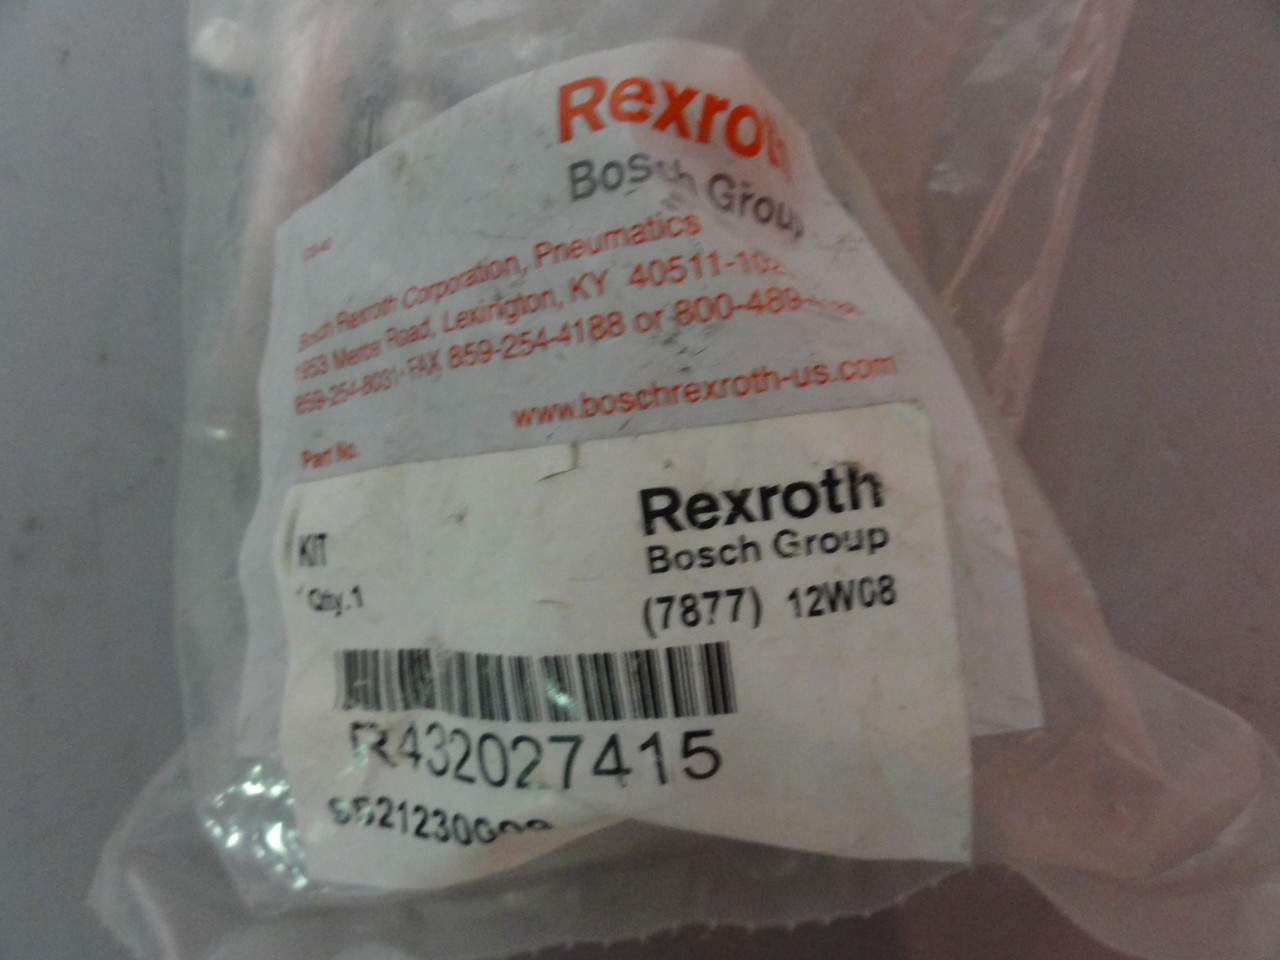 Rexroth Bosch 7877 01 W 45 Valve Base- New